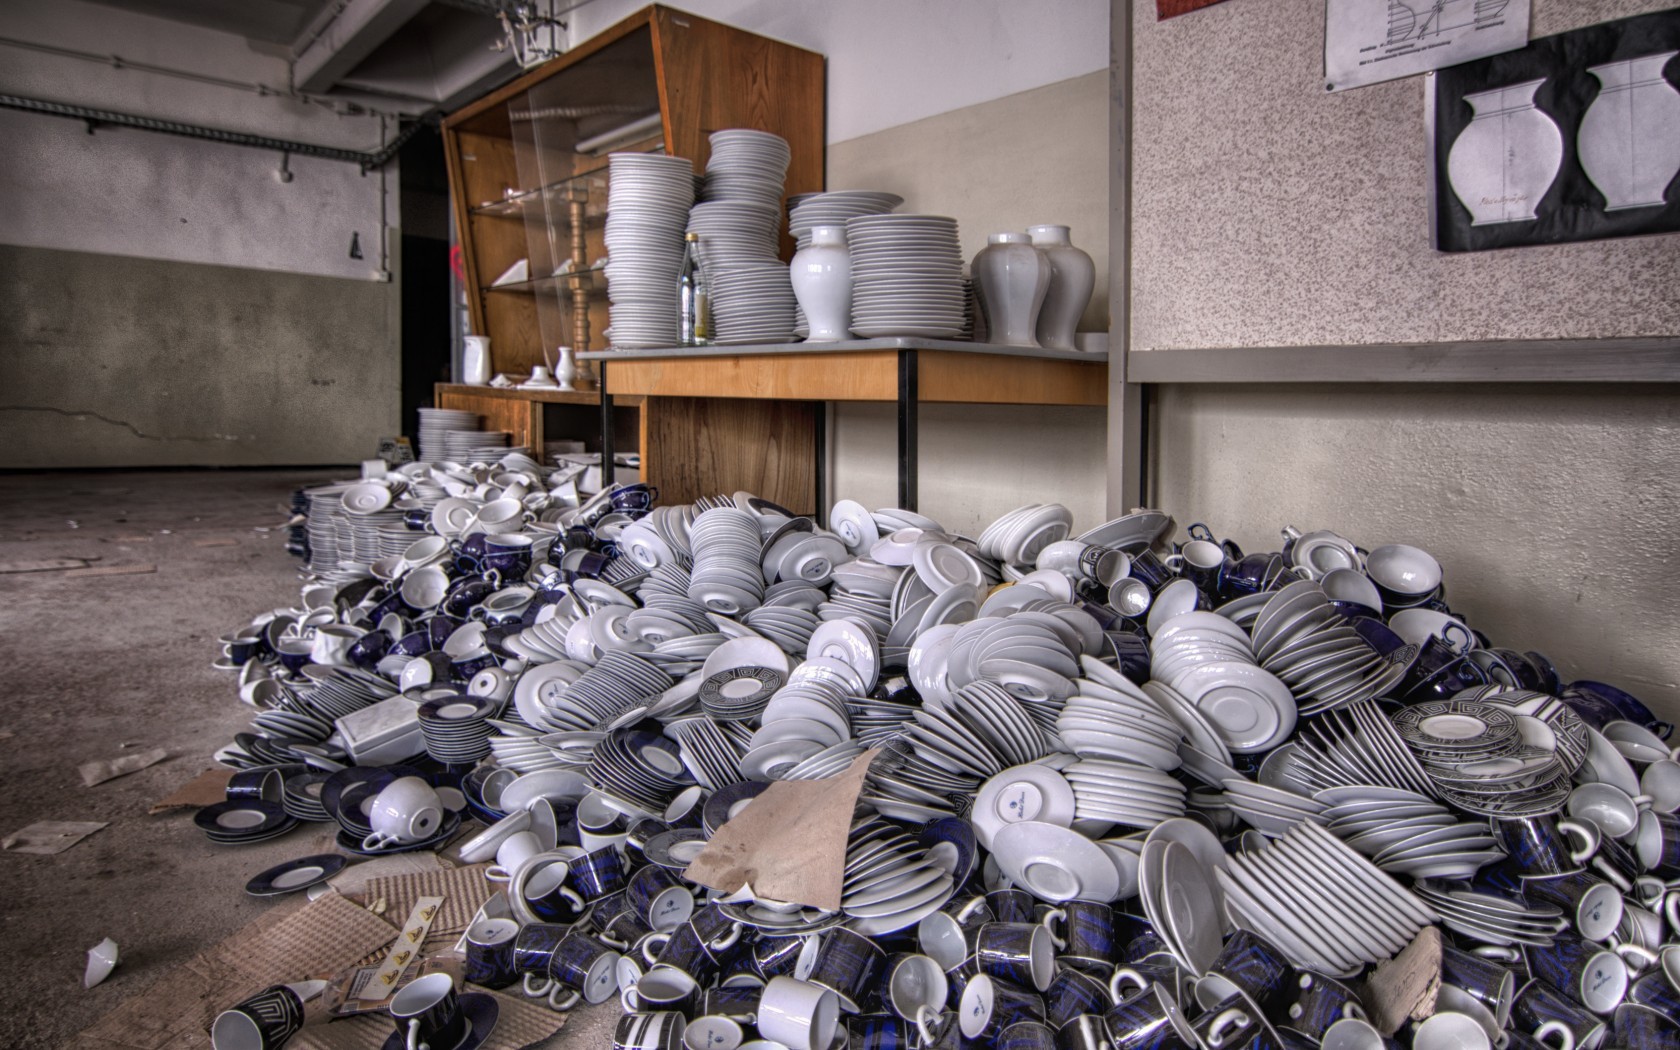 Interior Room Plates Mugs Cutlery Vases Workshops 1680x1050